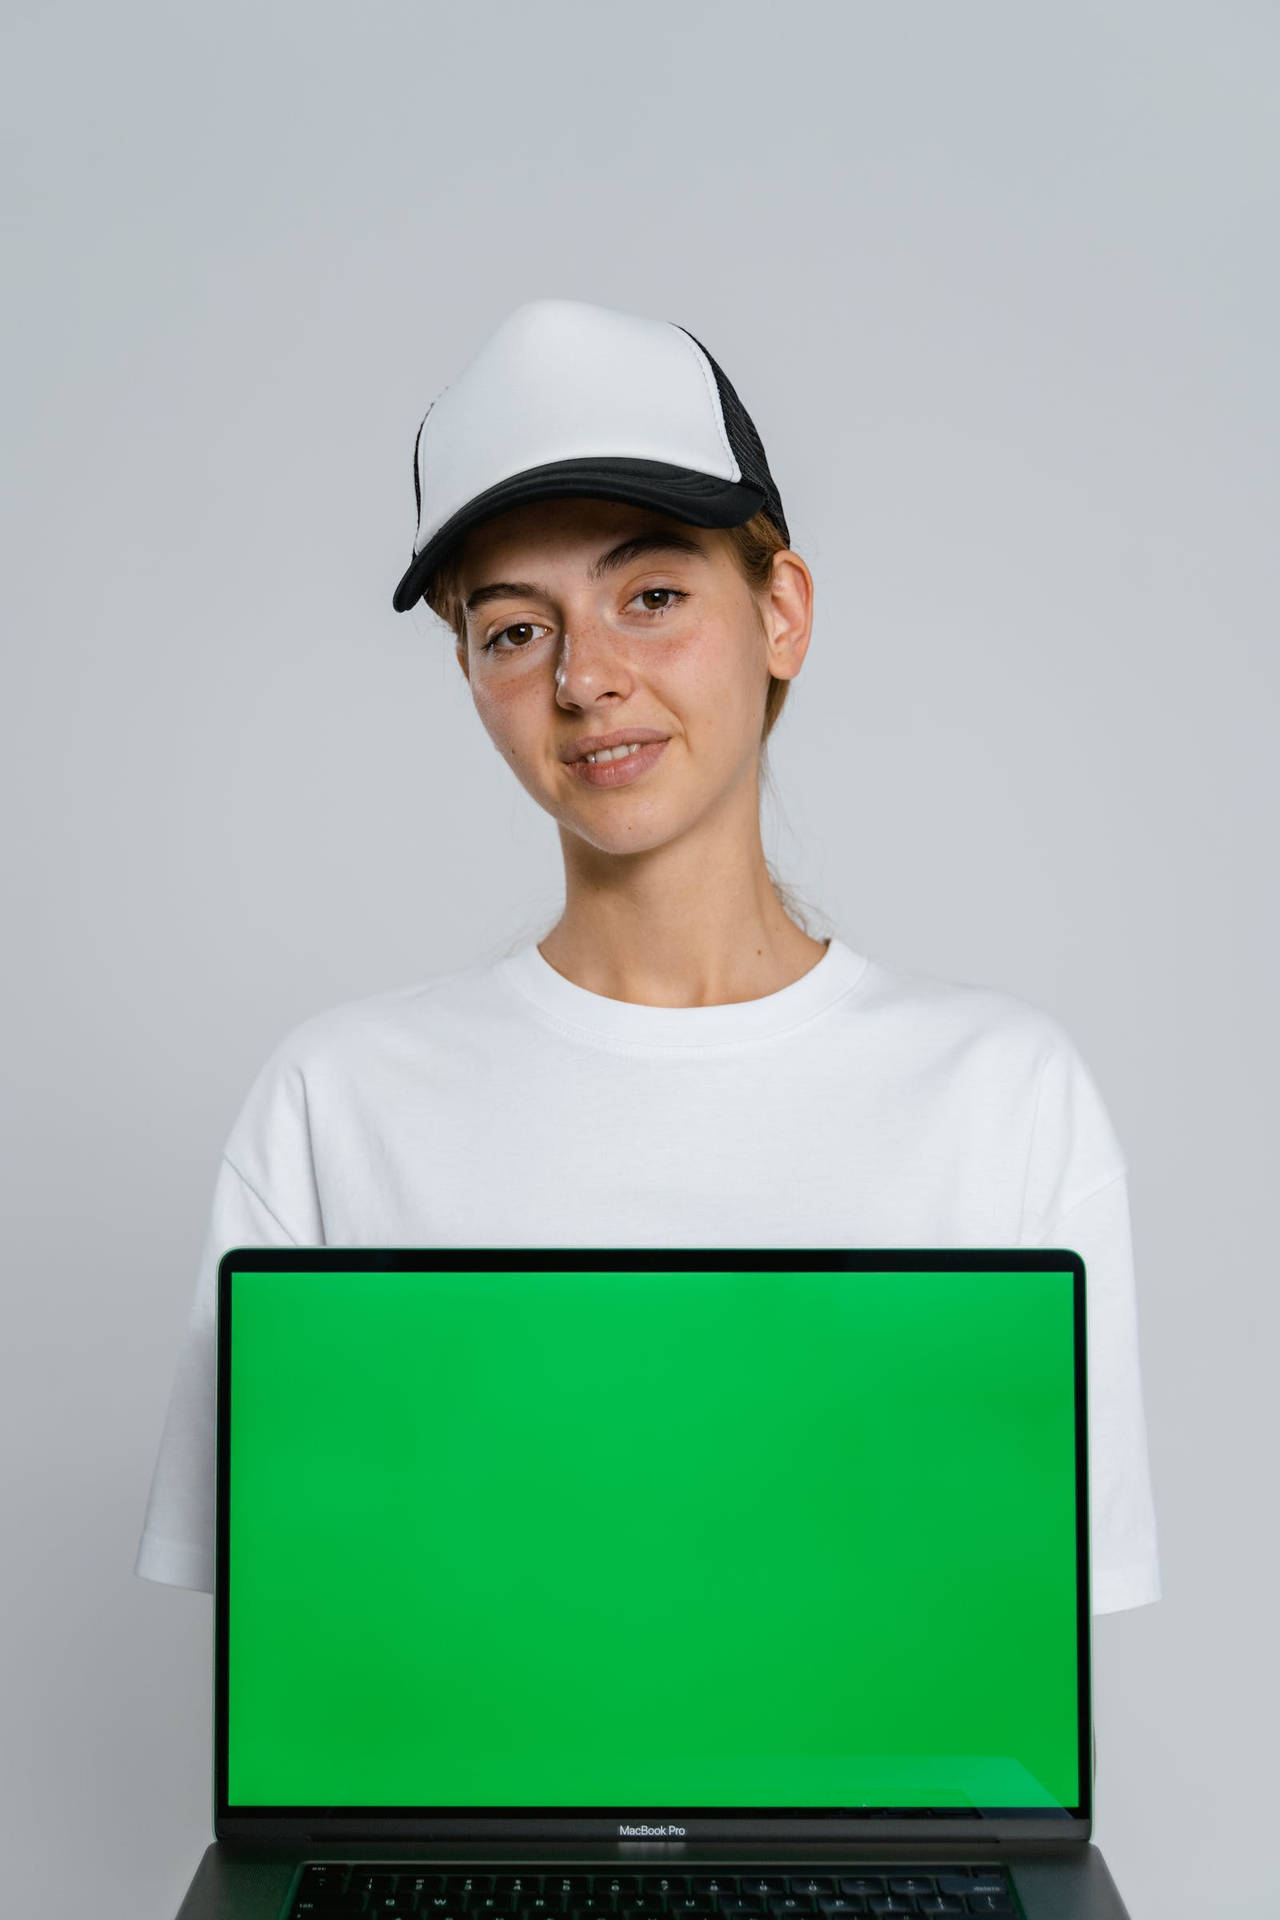 Green Screen Laptop